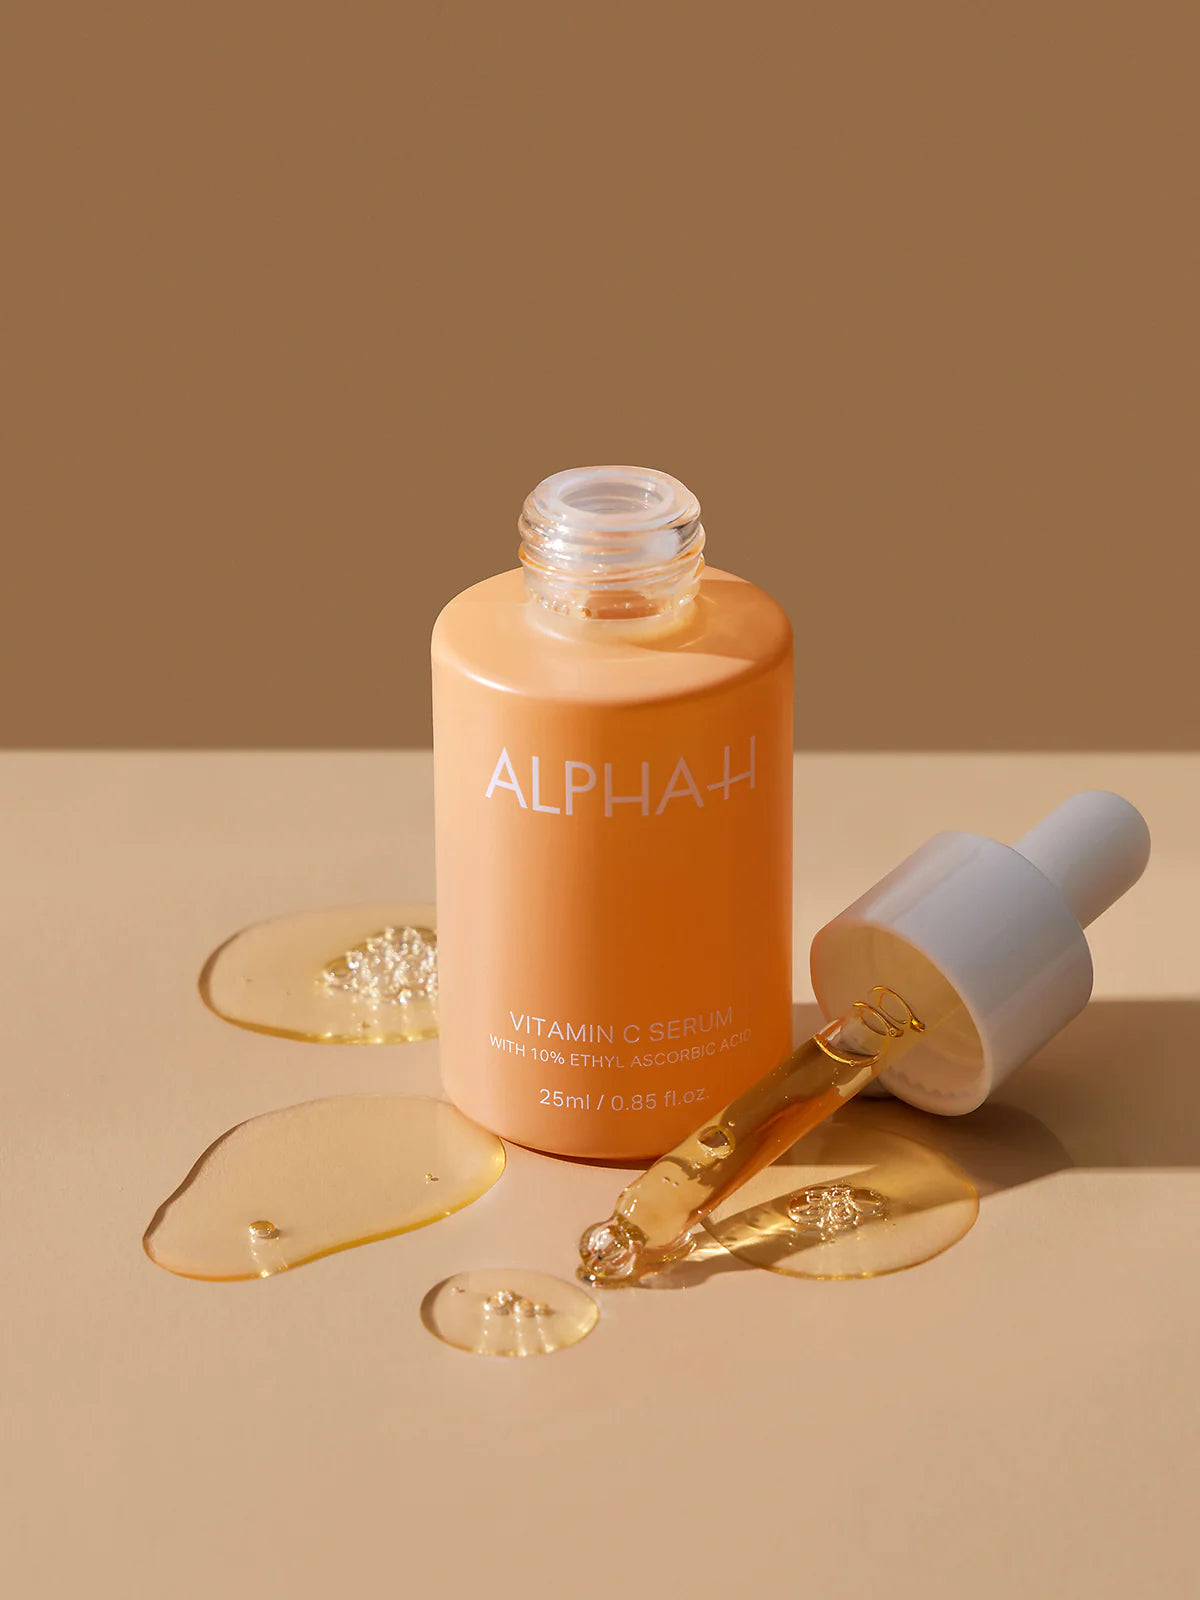 ALpha-H Vitamin C Serum with 10% Ethyl Ascorbic Acid